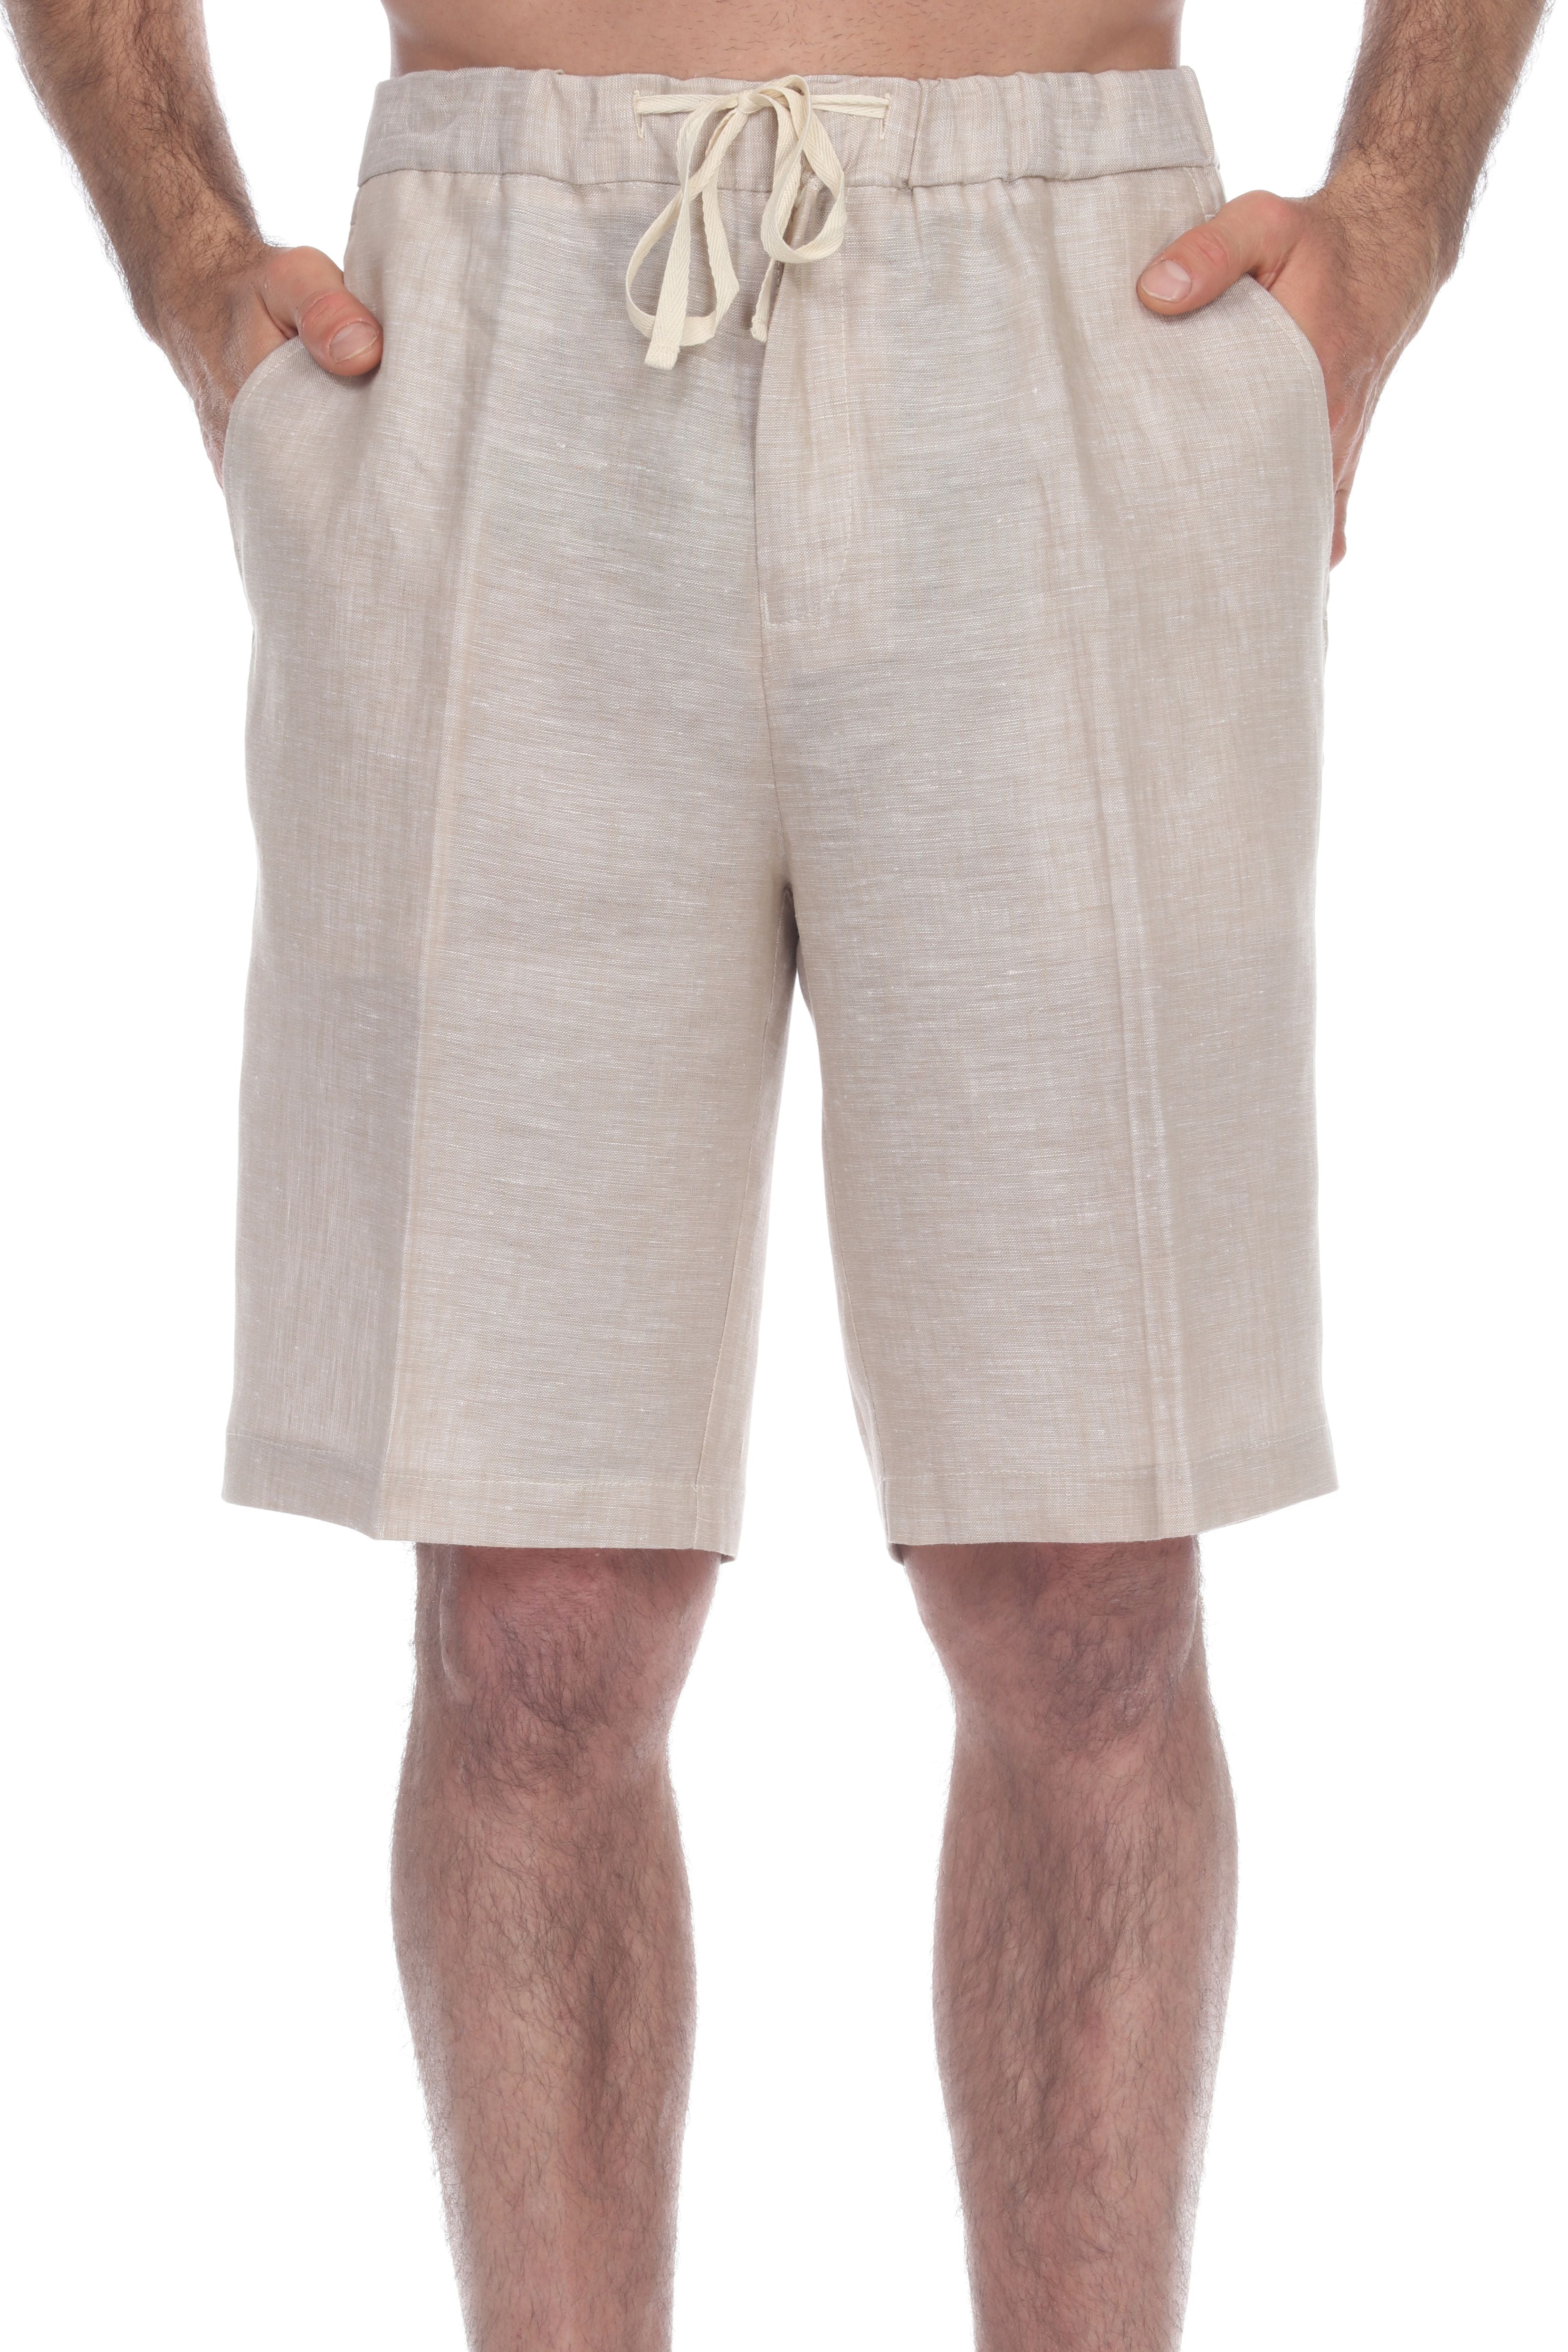 Resortwear Shorts